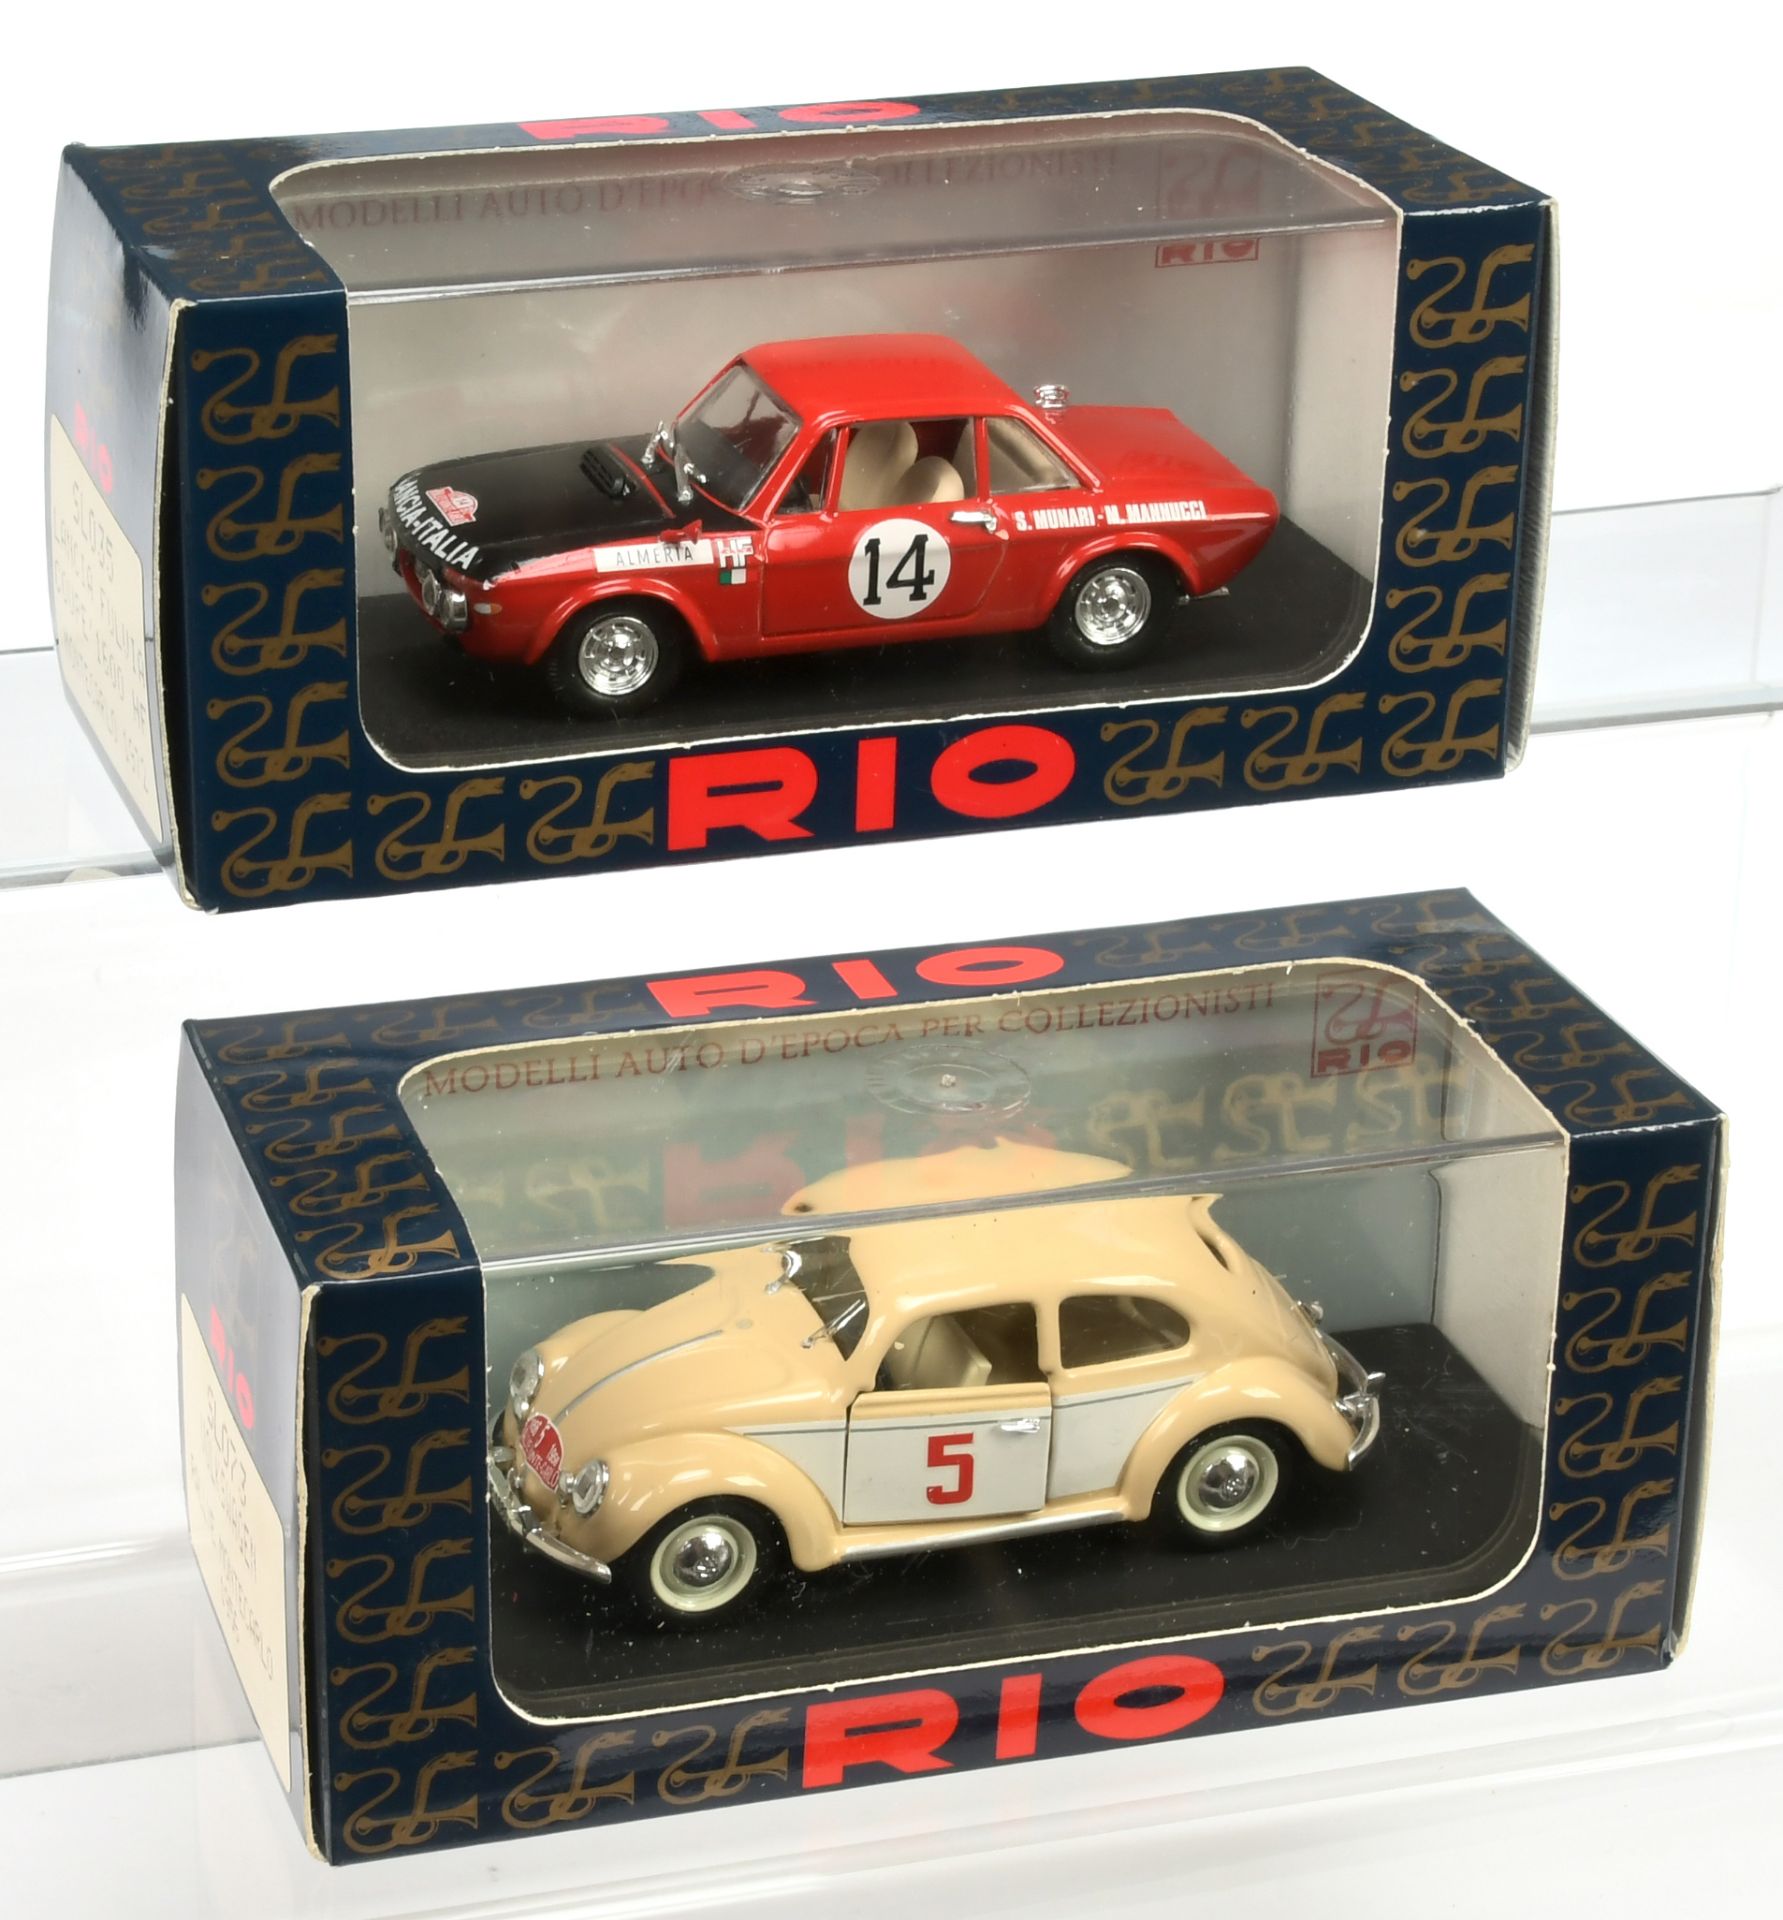 Rio Pair of Racing cars.